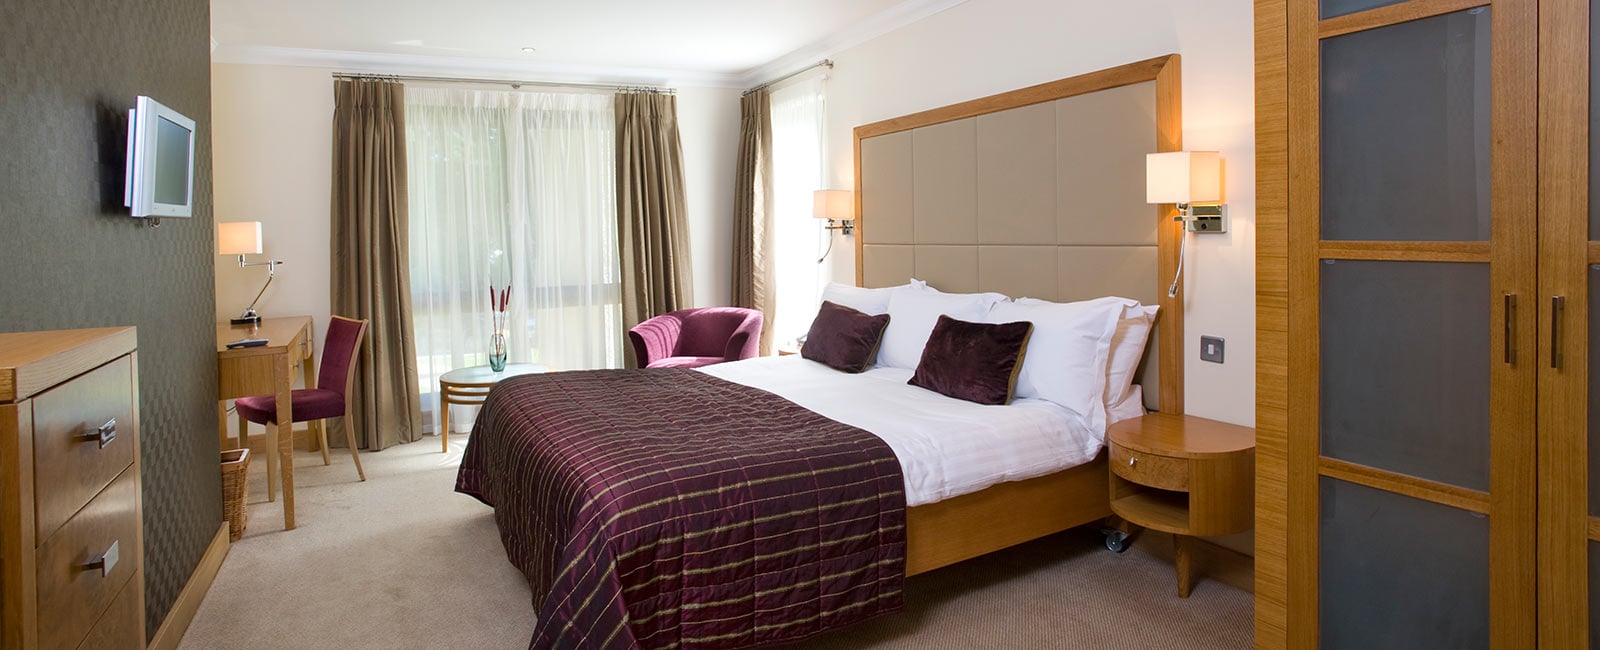 Bedroom at Hilton Grand Vacations Club Resort at Dunkeld in Perthshire, Scotland